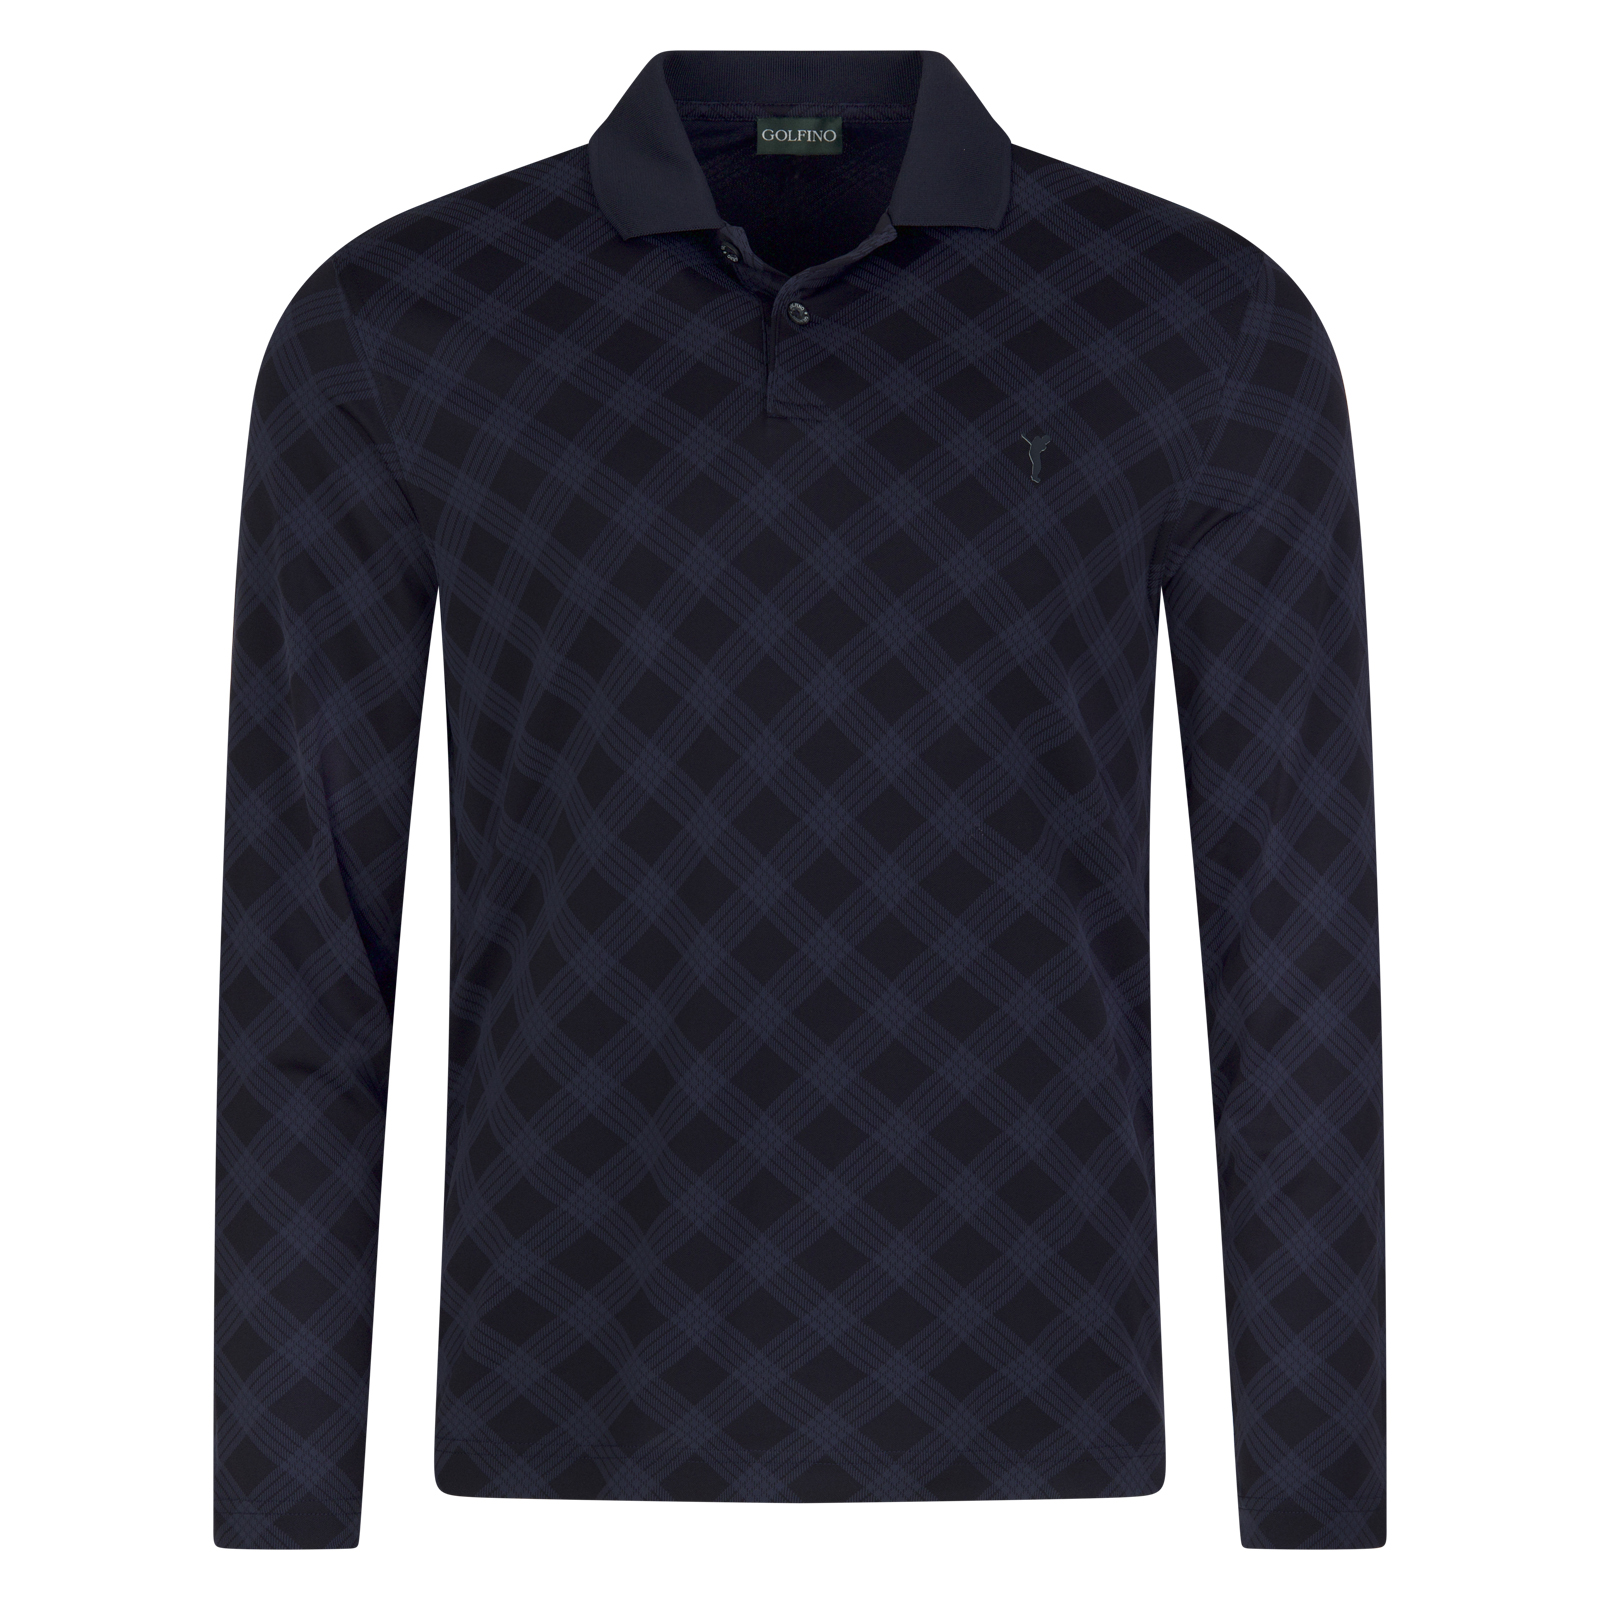 Men's quick dry long-sleeved golf polo shirt